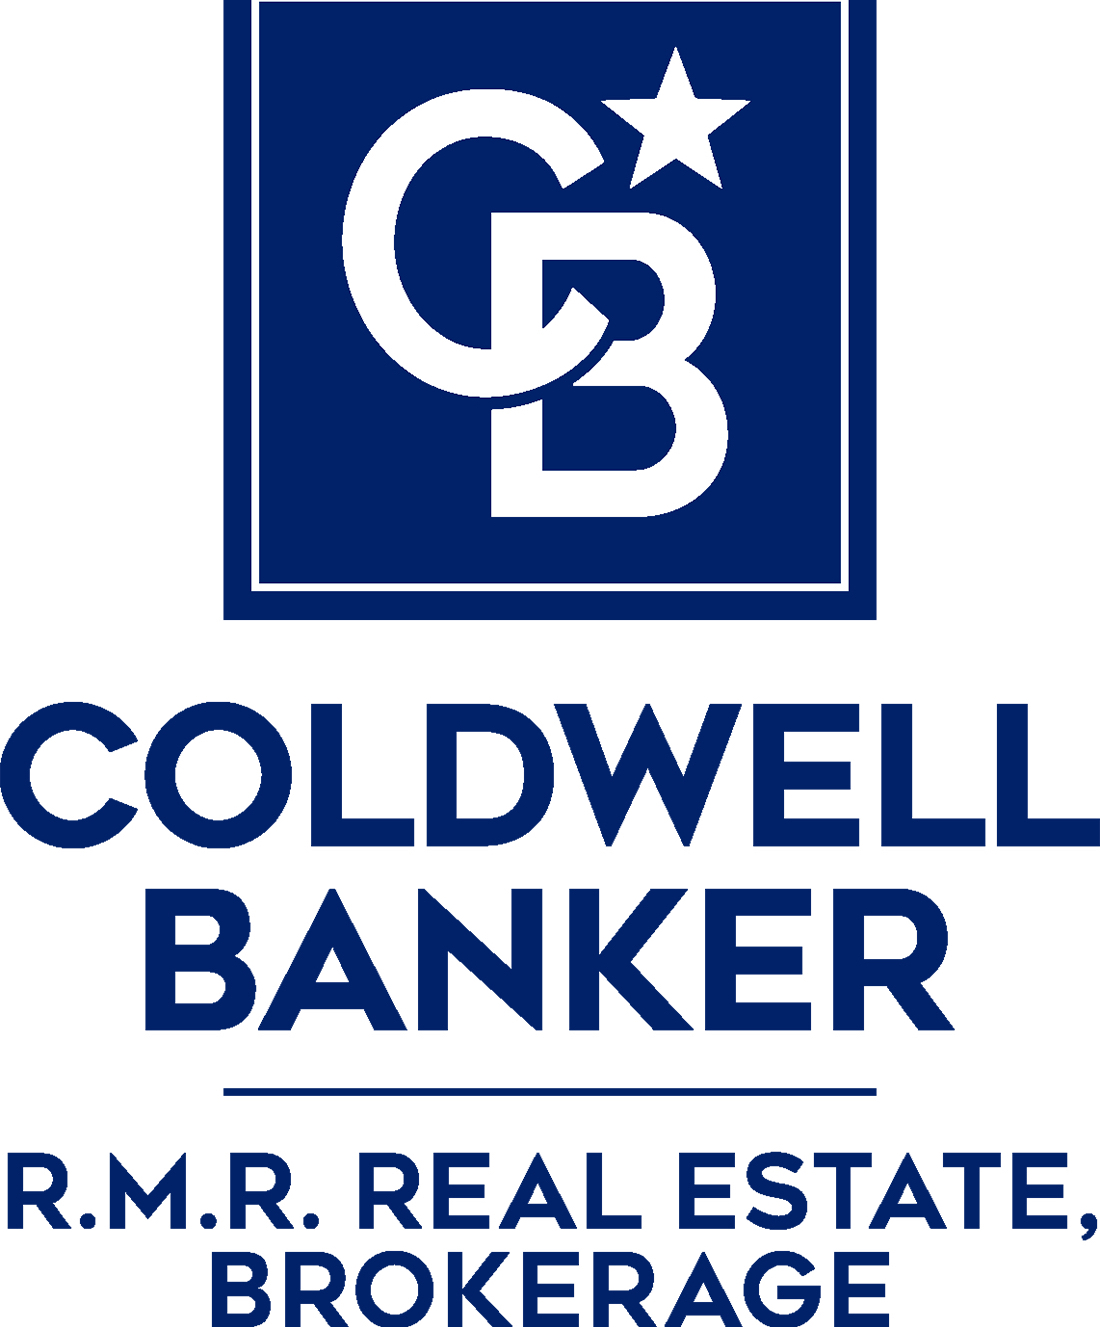 Coldwell Banker RMR Real Estate Brokerage